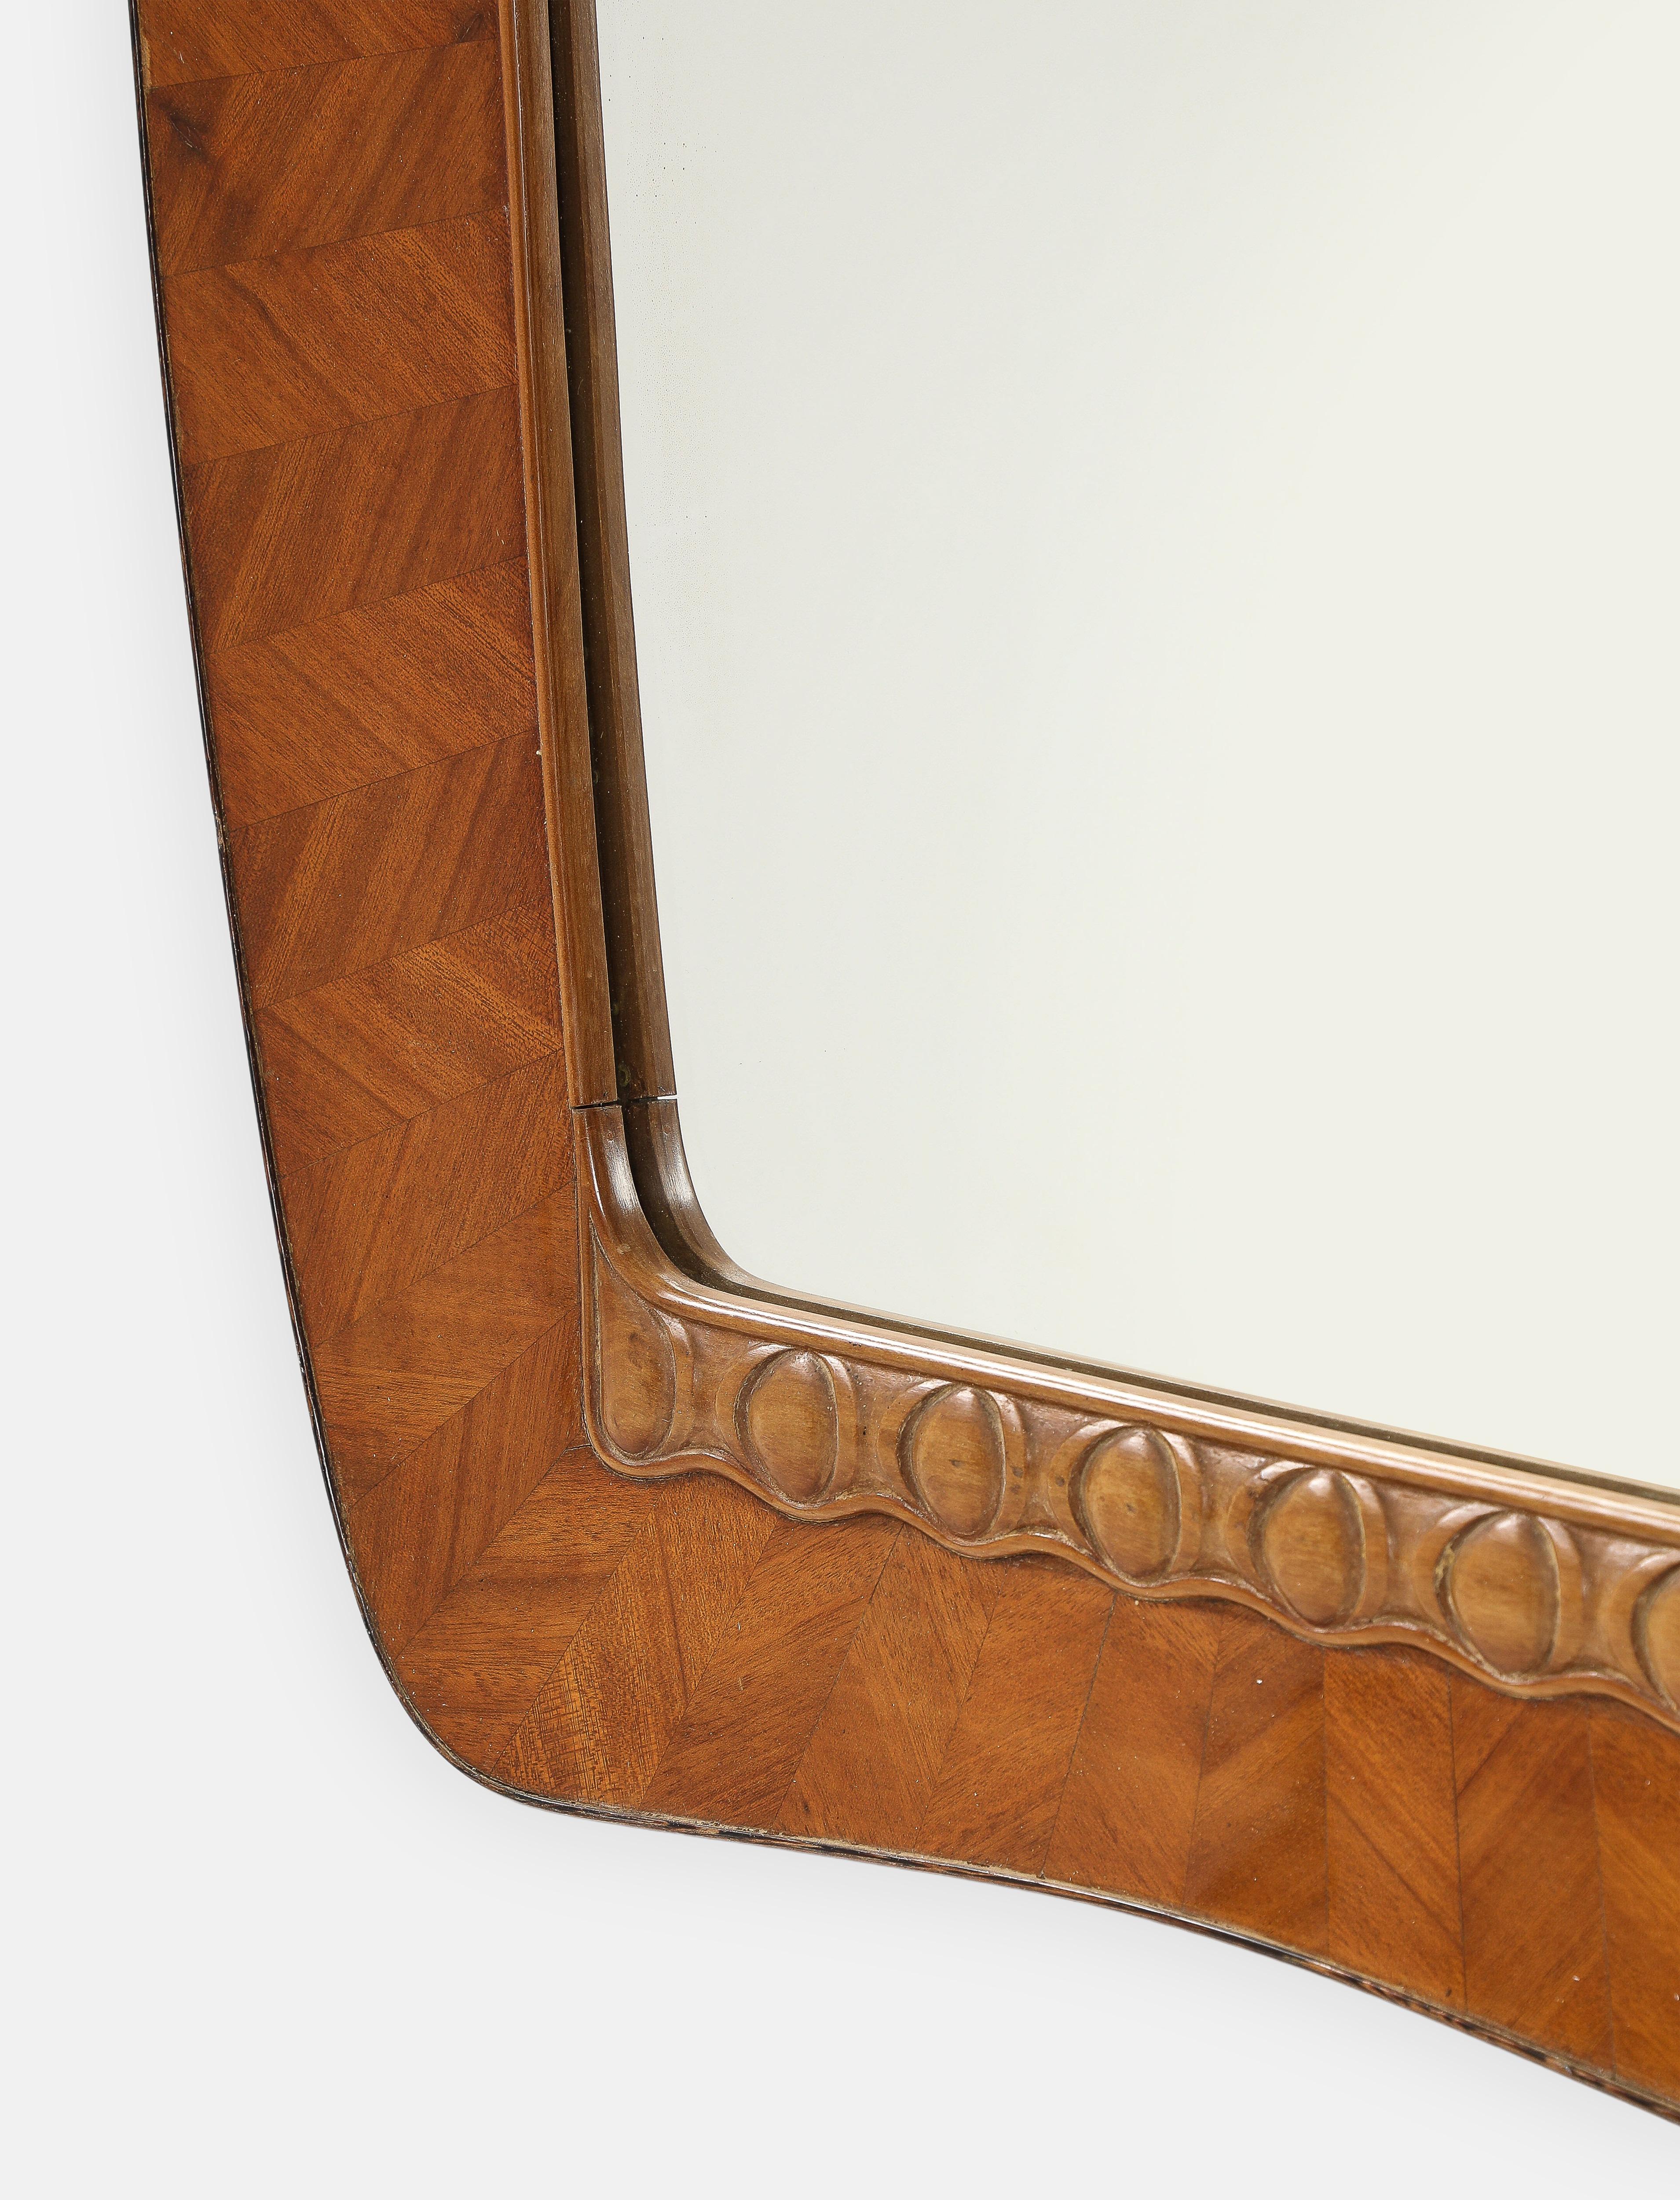 Paolo Buffa for Serafino Arrighi Rare Walnut Radicca Mirror, Italy, 1930s For Sale 2